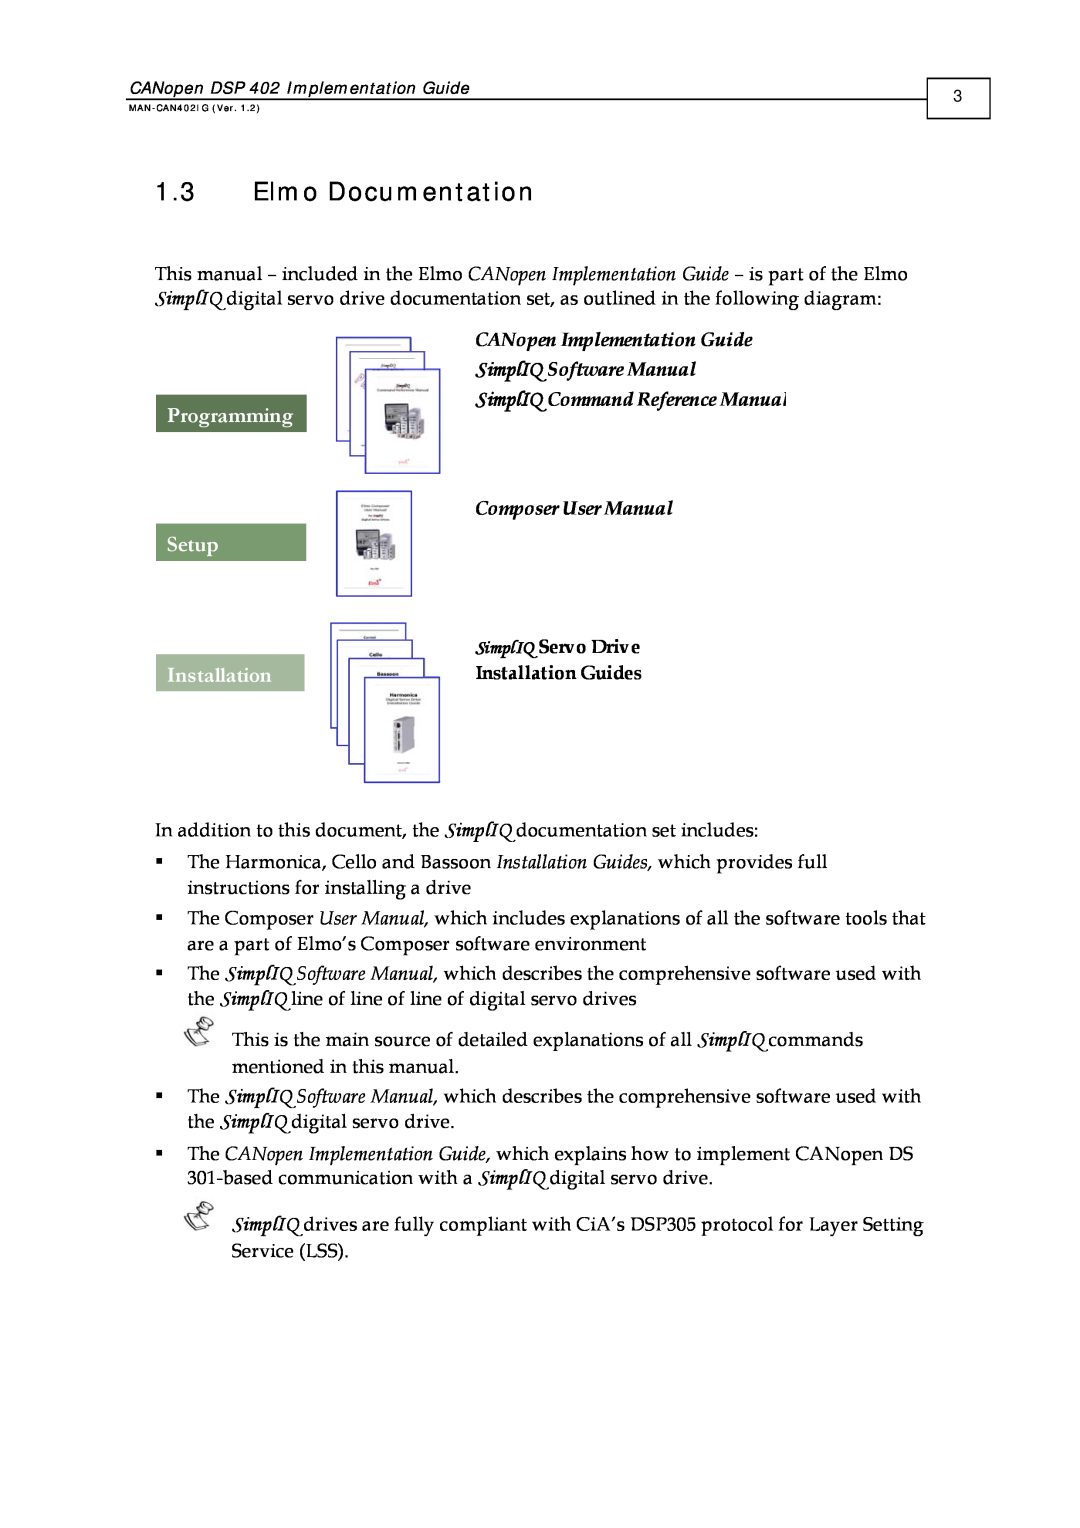 Elmo DSP 402 1.3Elmo Documentation, Programming Setup Installation, CANopen Implementation Guide, SimplIQ Software Manual 